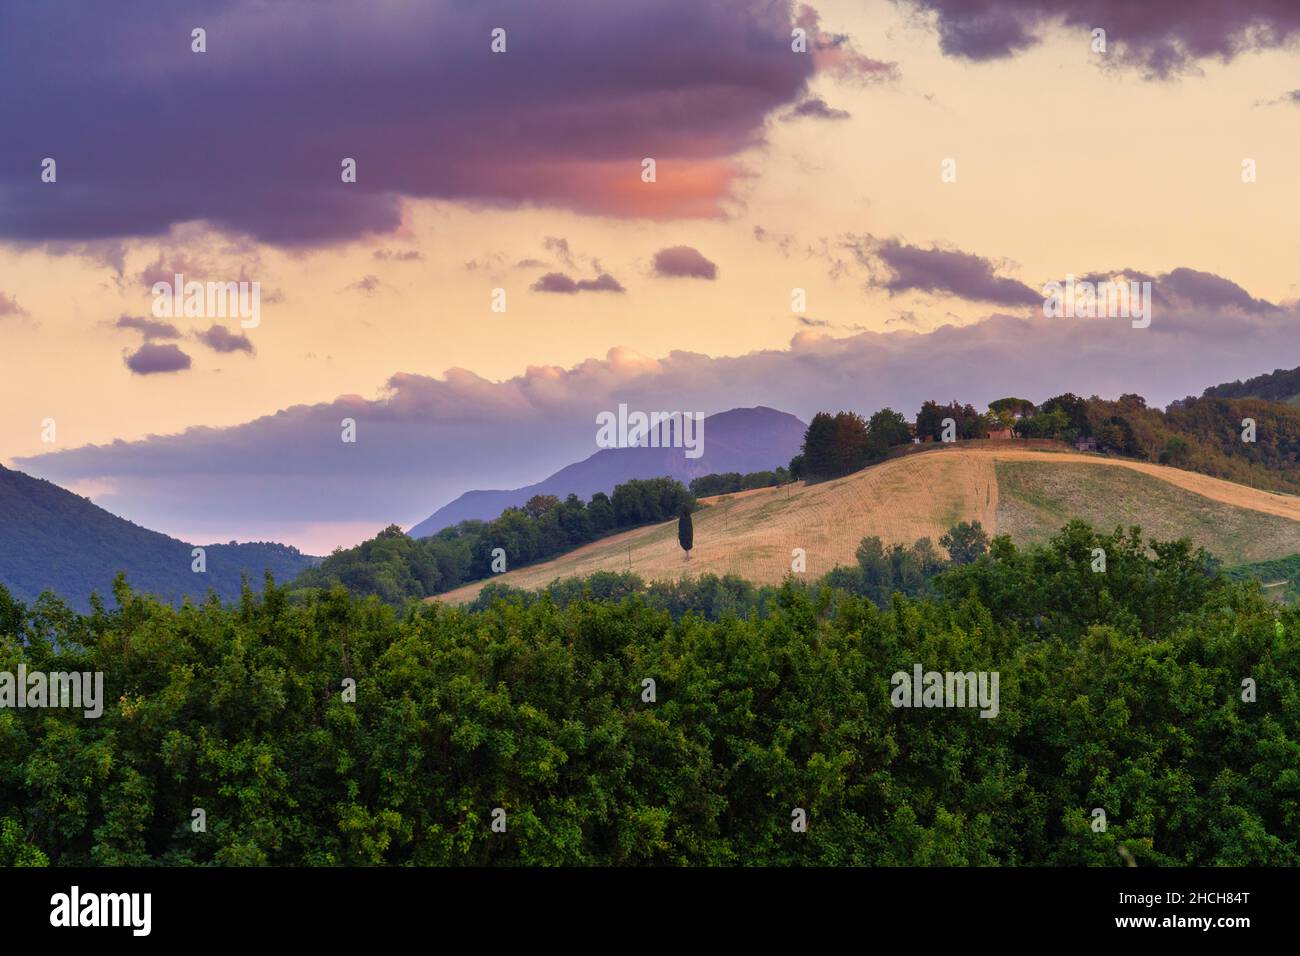 Countryside at sunset, Corinaldo, Marche, Italy Stock Photo